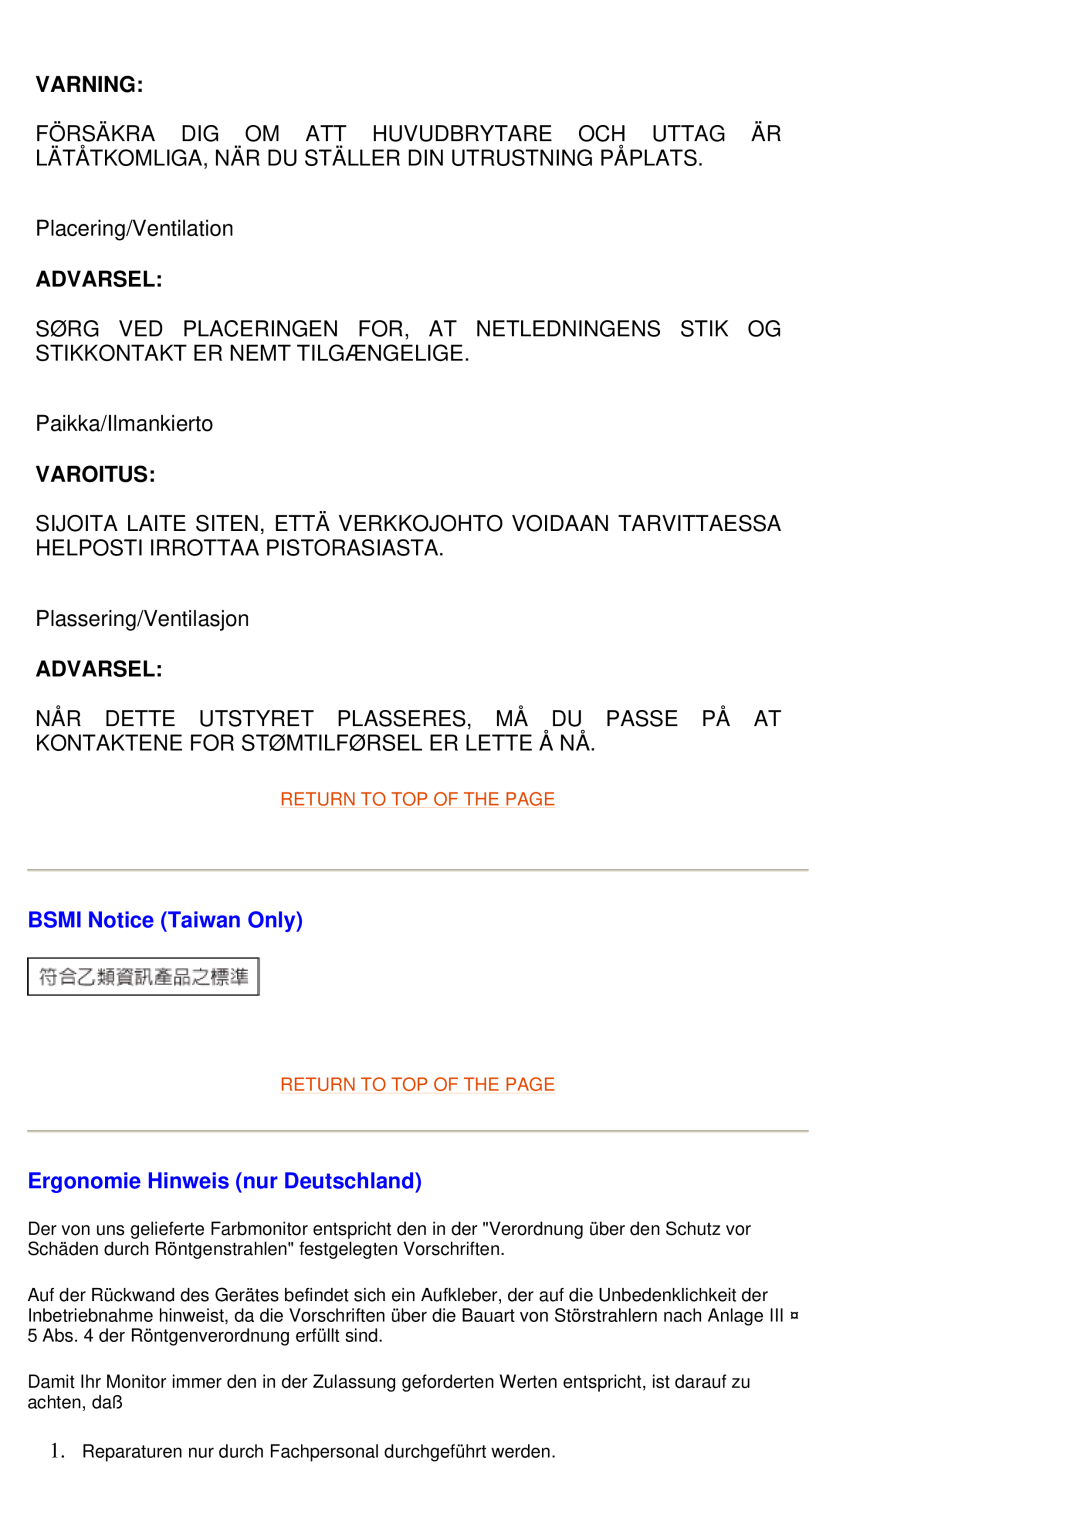 Philips 105G7 manual Varning, Advarsel, Varoitus, BSMI Notice Taiwan Only, Ergonomie Hinweis nur Deutschland 